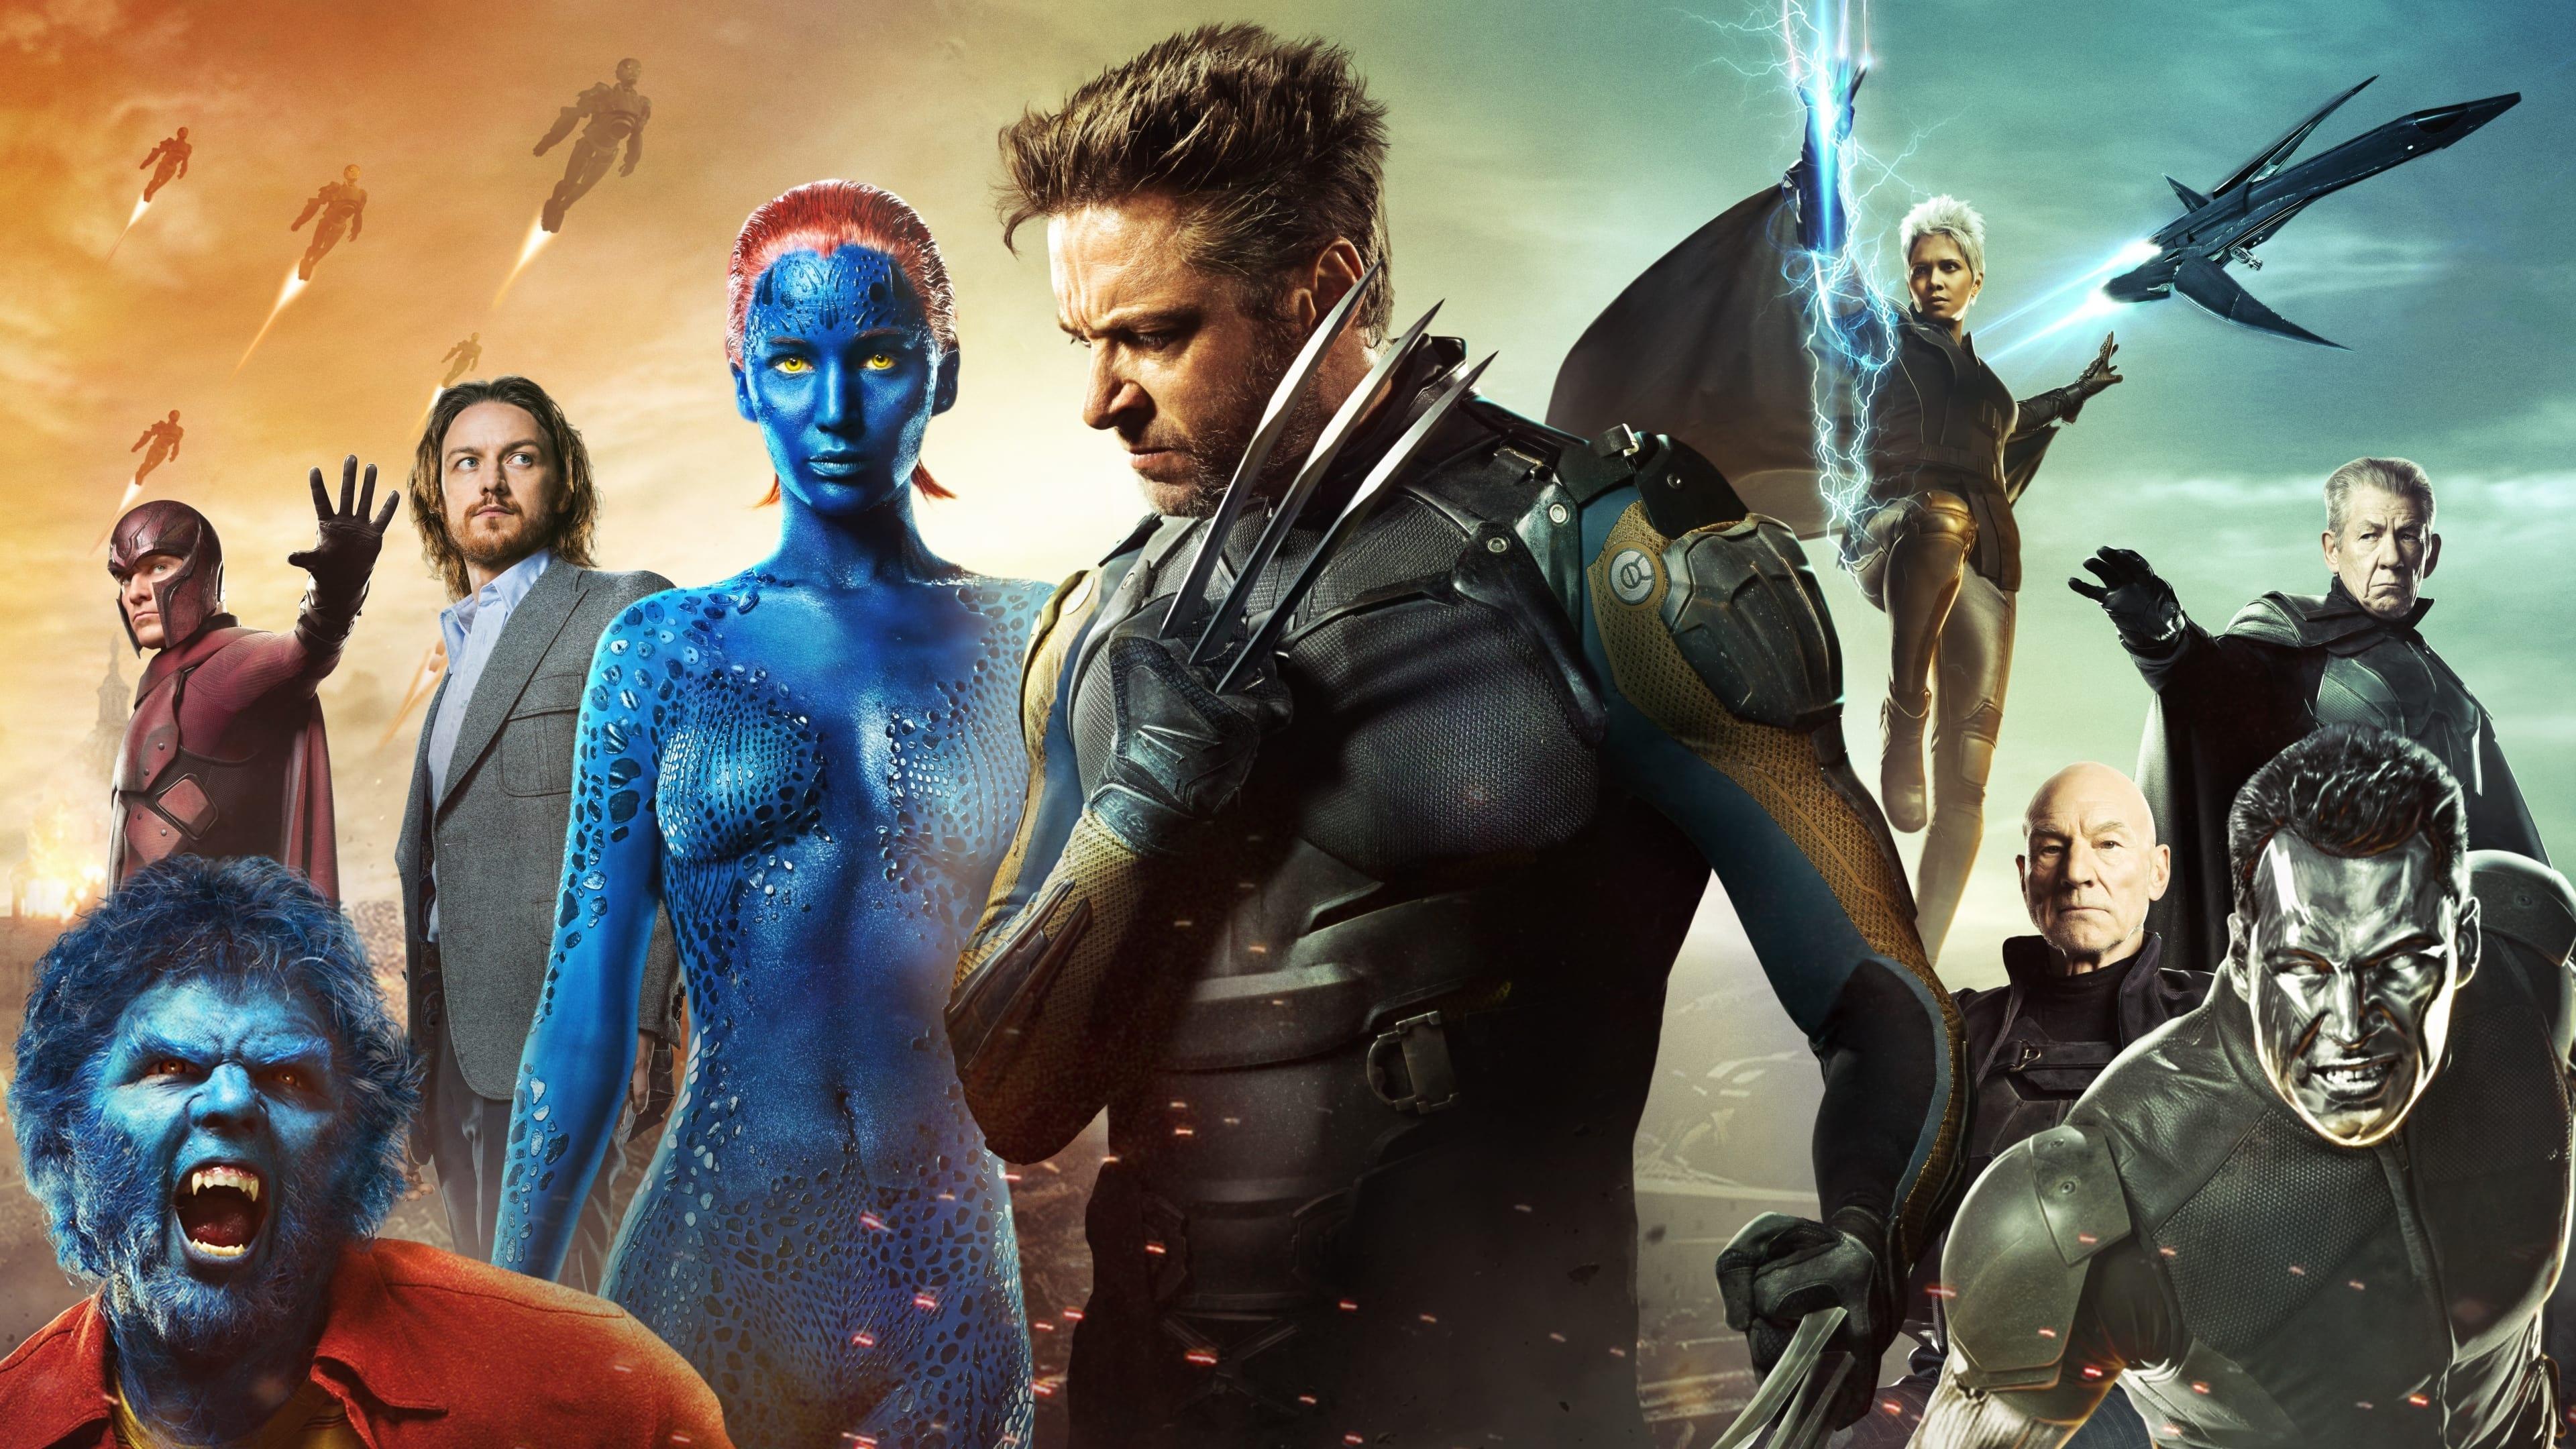 X-Men: Days of Future Past backdrop